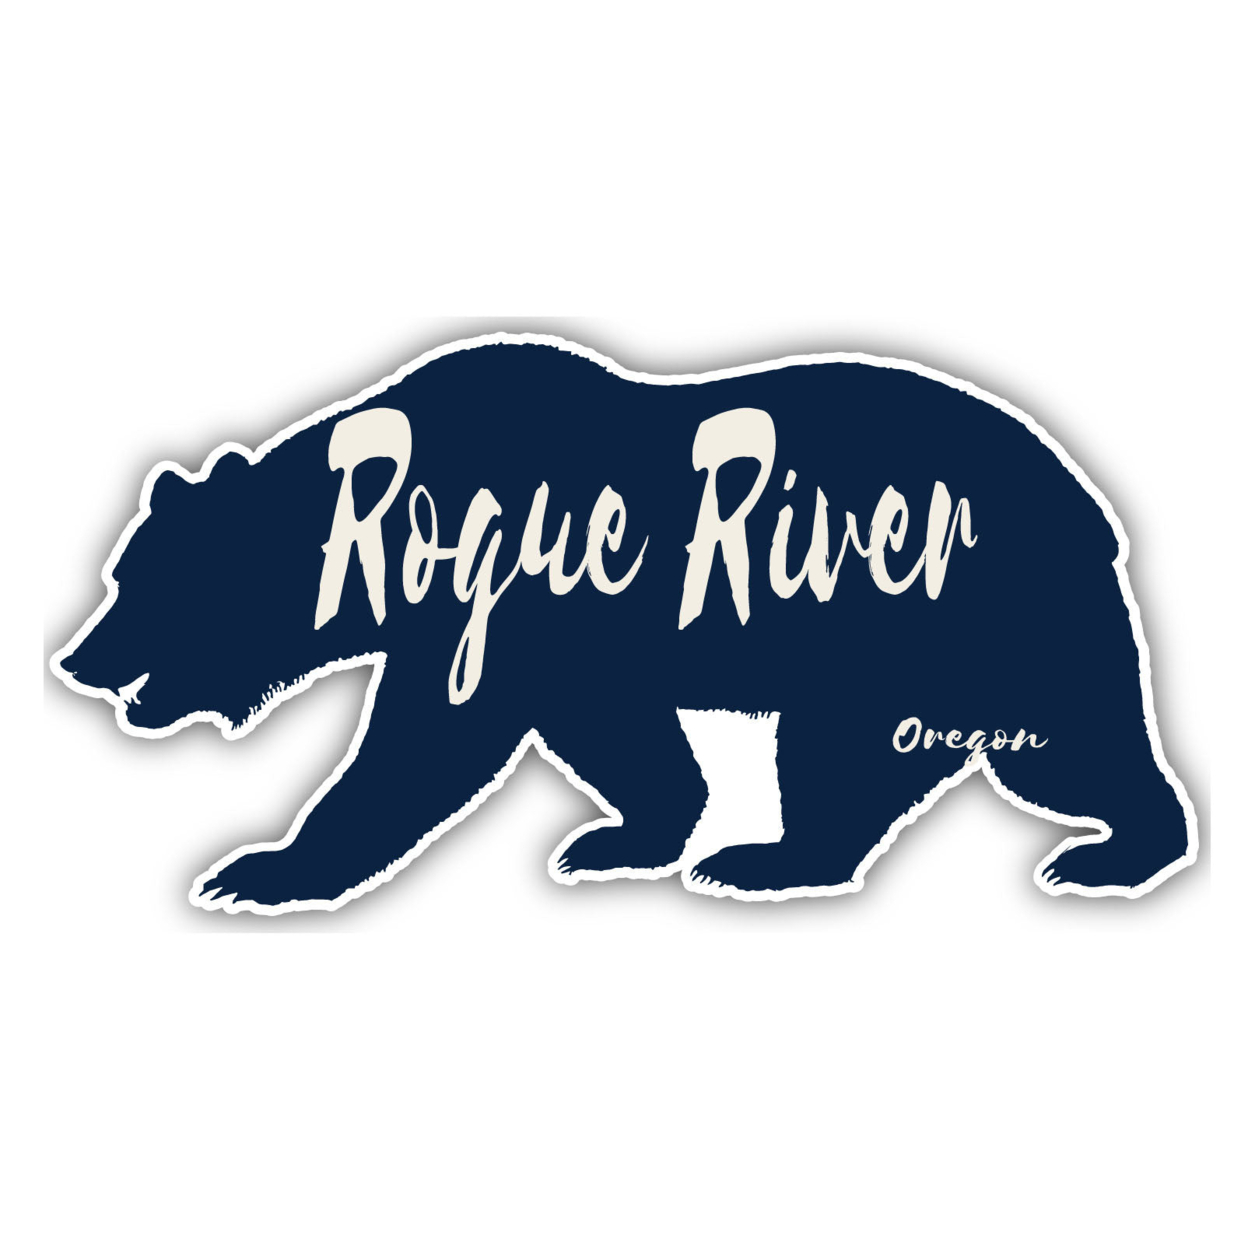 Rogue River Oregon Souvenir Decorative Stickers (Choose Theme And Size) - Single Unit, 4-Inch, Bear